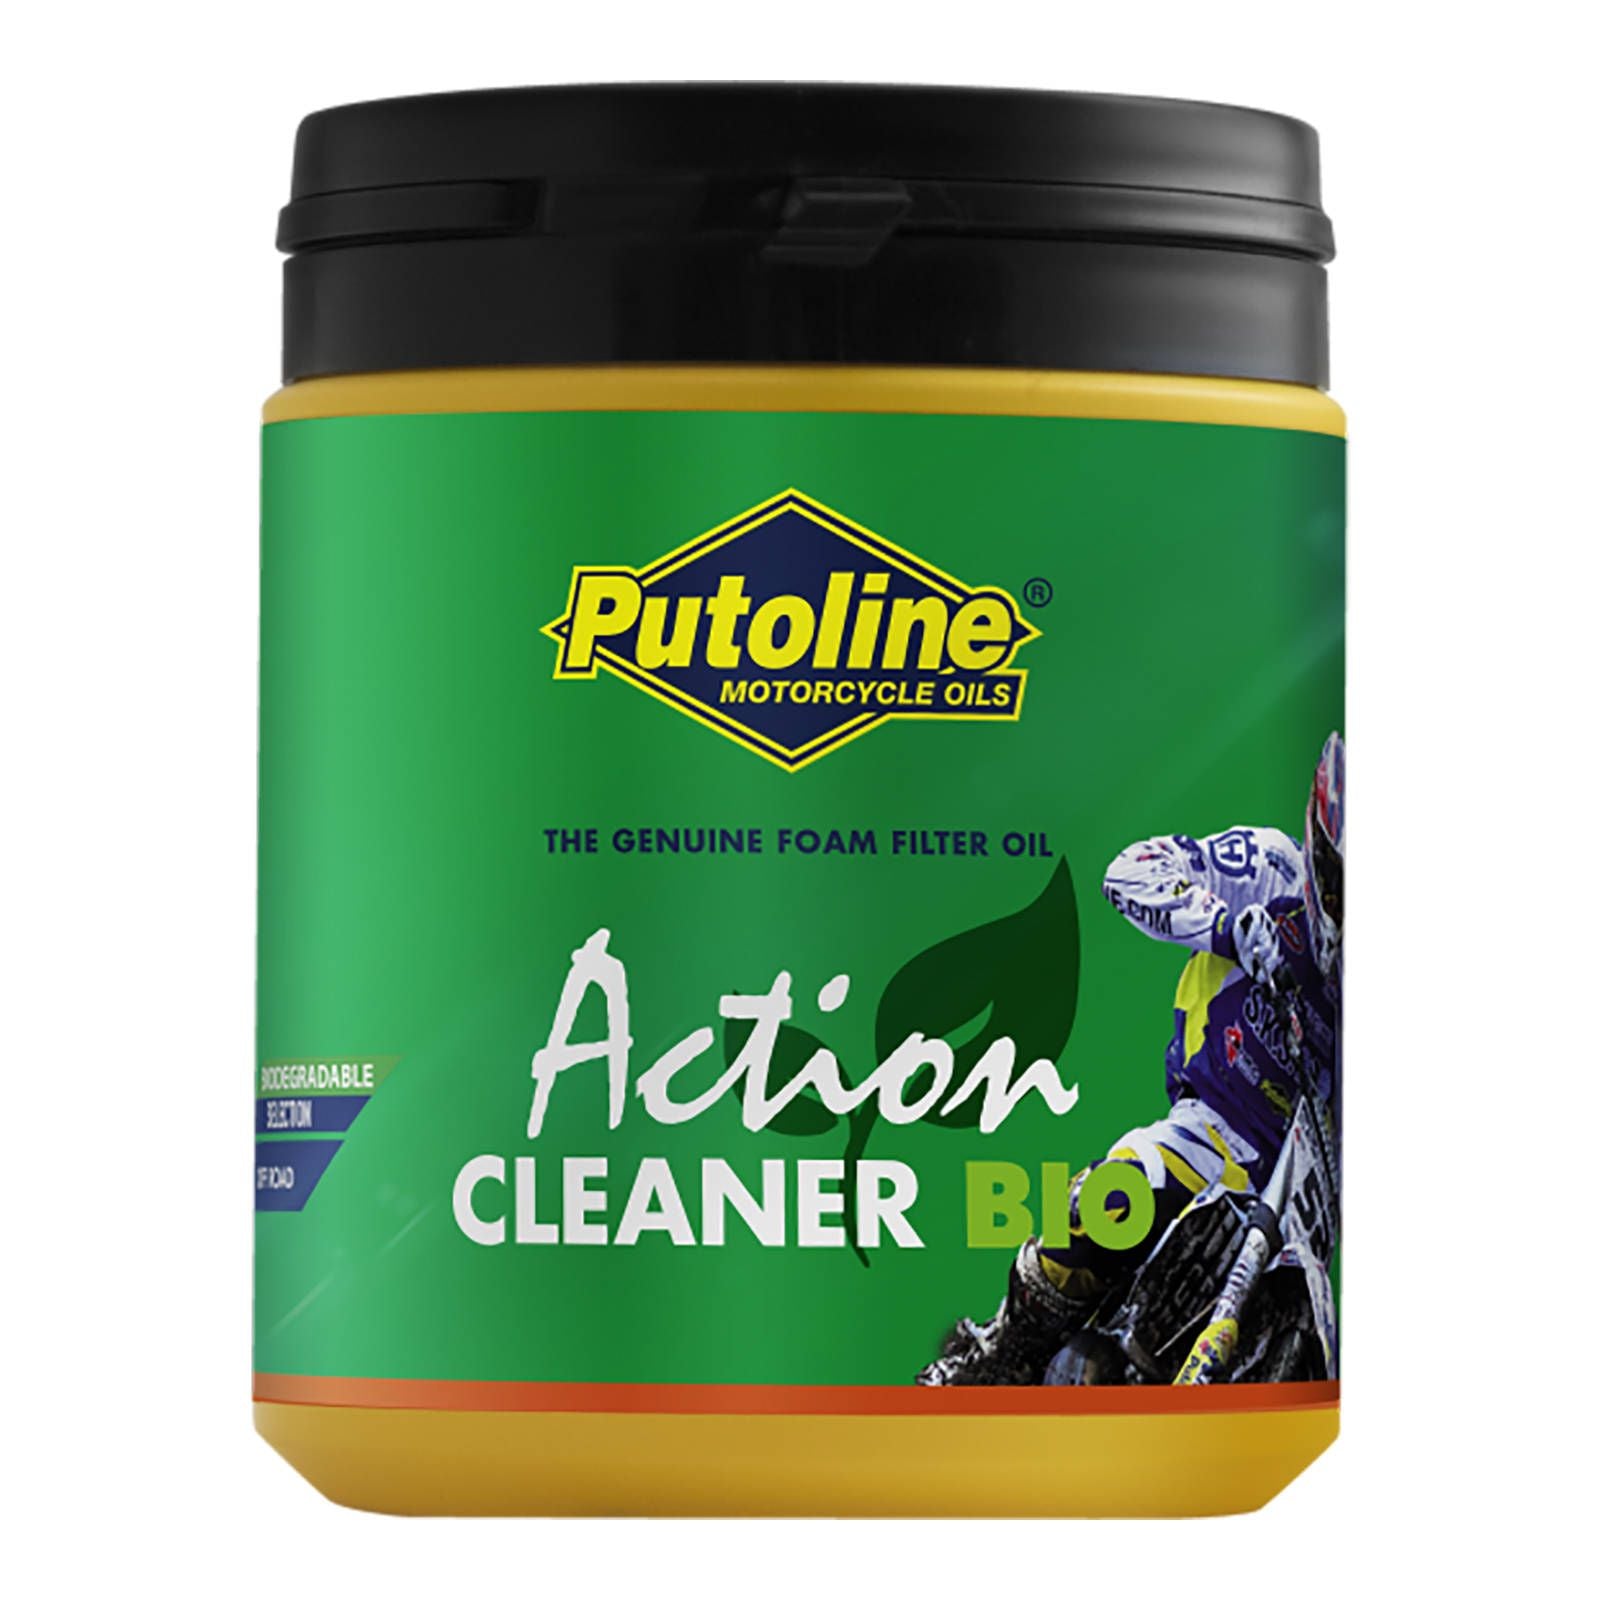 New PUTOLINE Action Bio Air Filter Cleaner - 600g #PTBIOAFC600